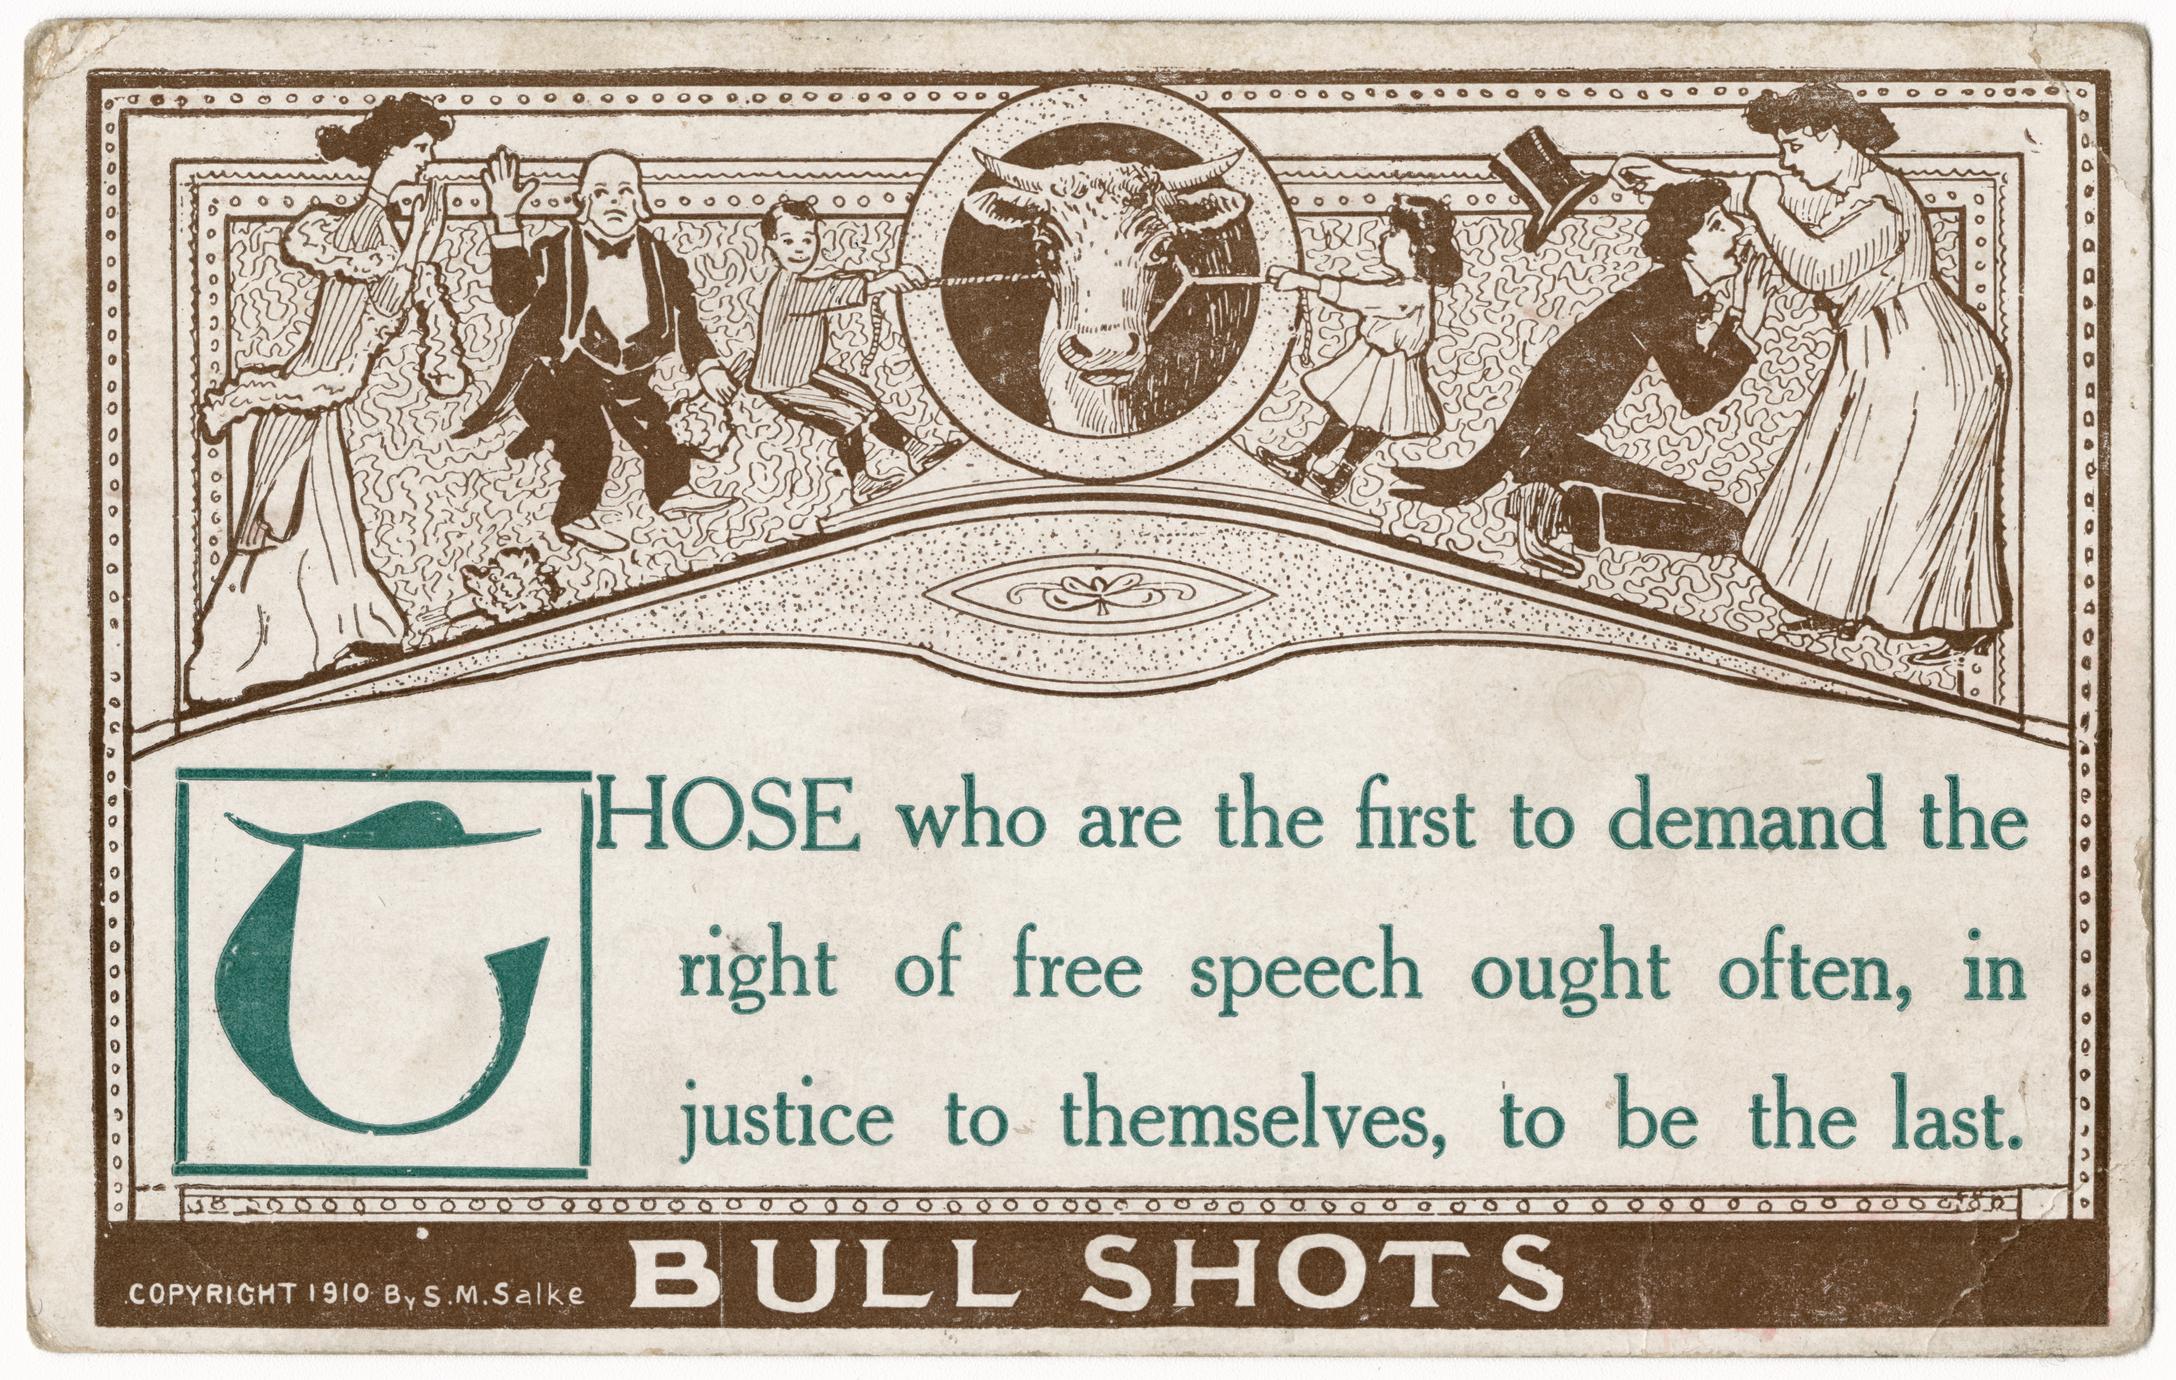 Bull shots, suffrage postcard (1 of 2)